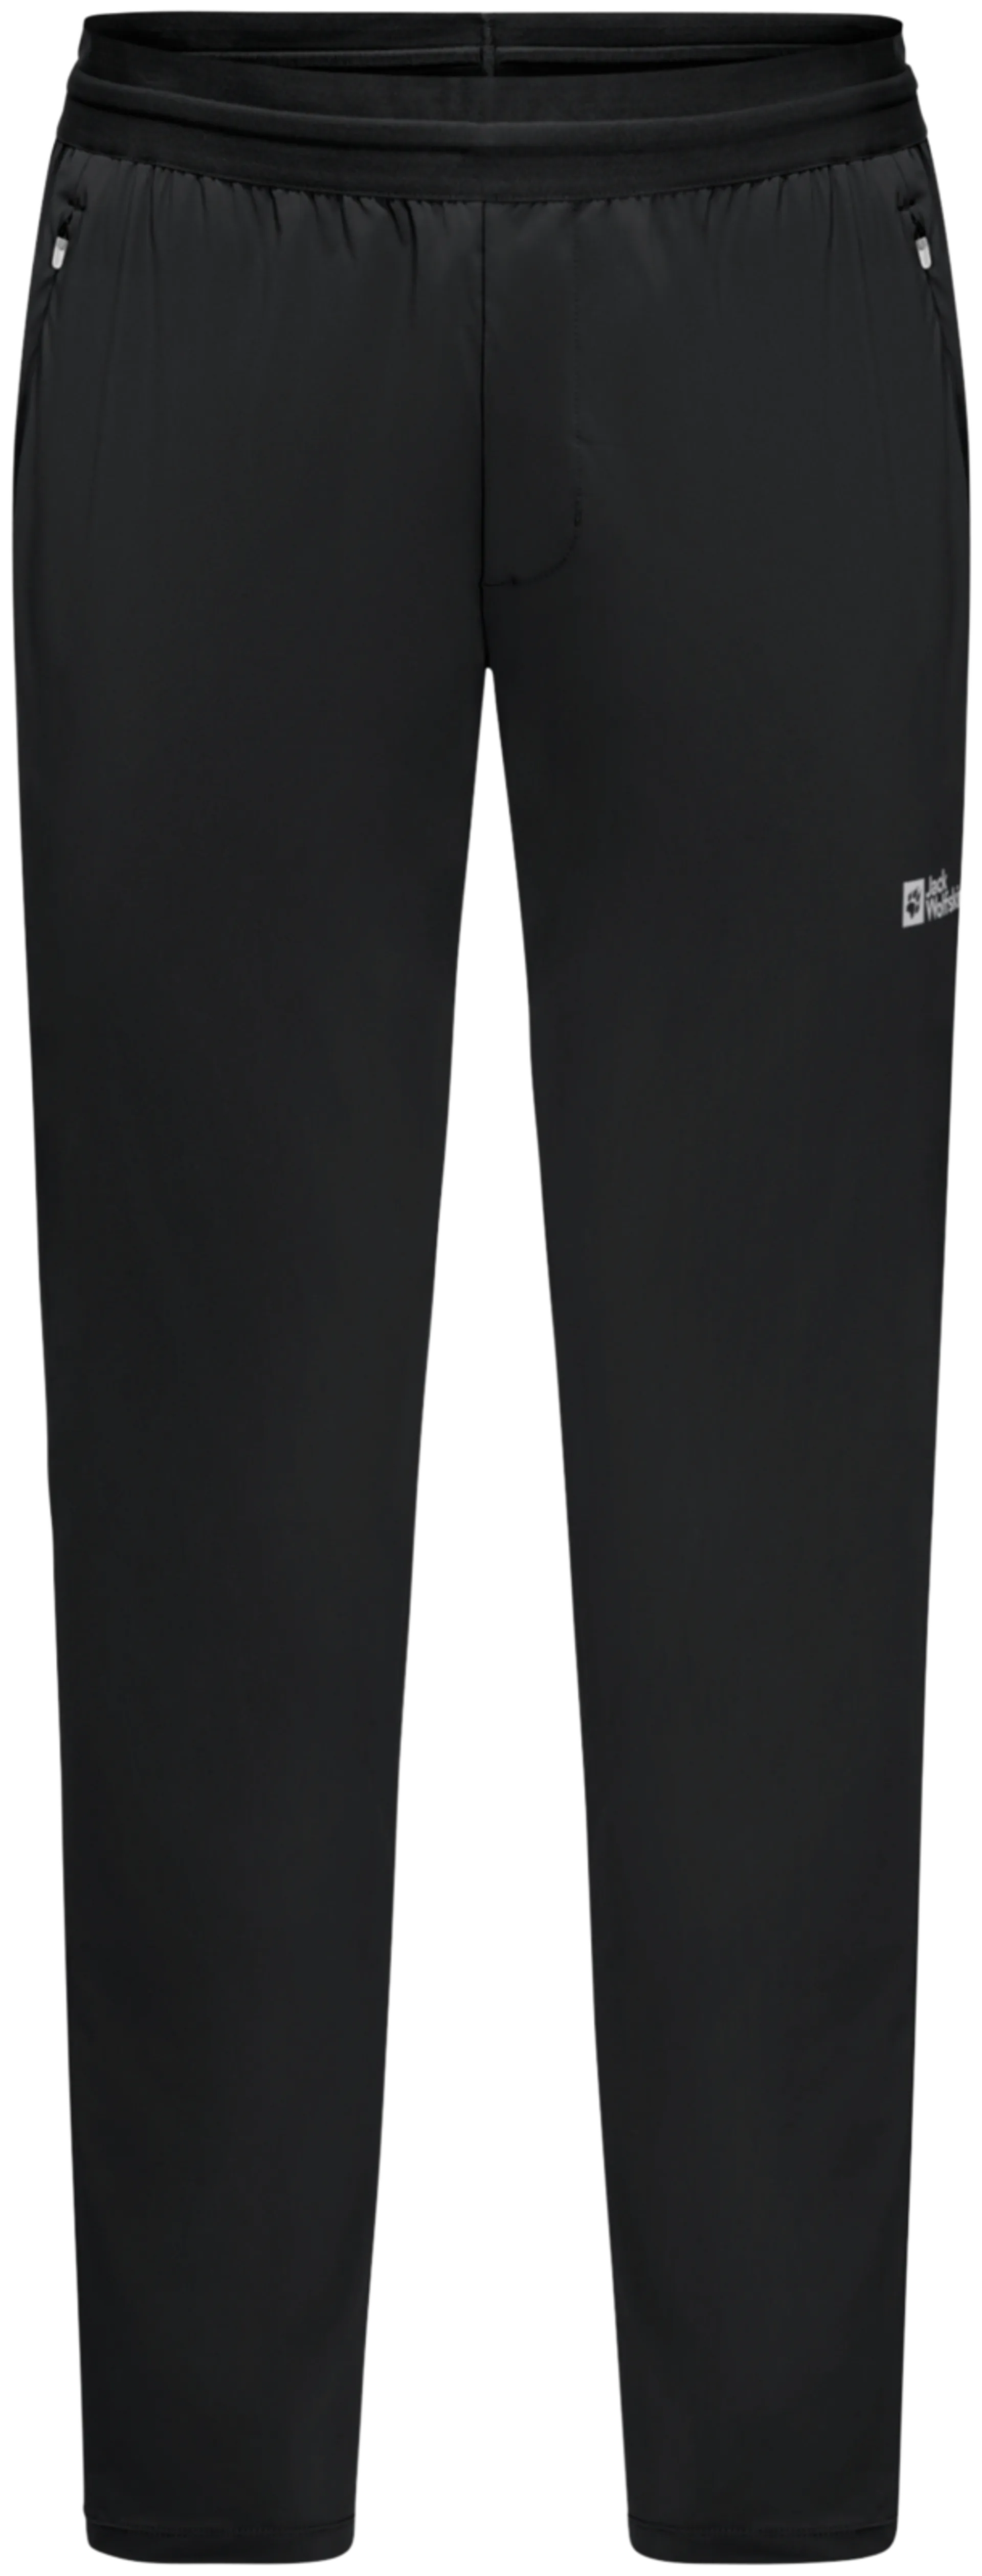 Jack Wolfskin miesten housut prelight pants 1508971 - BLACK - 1